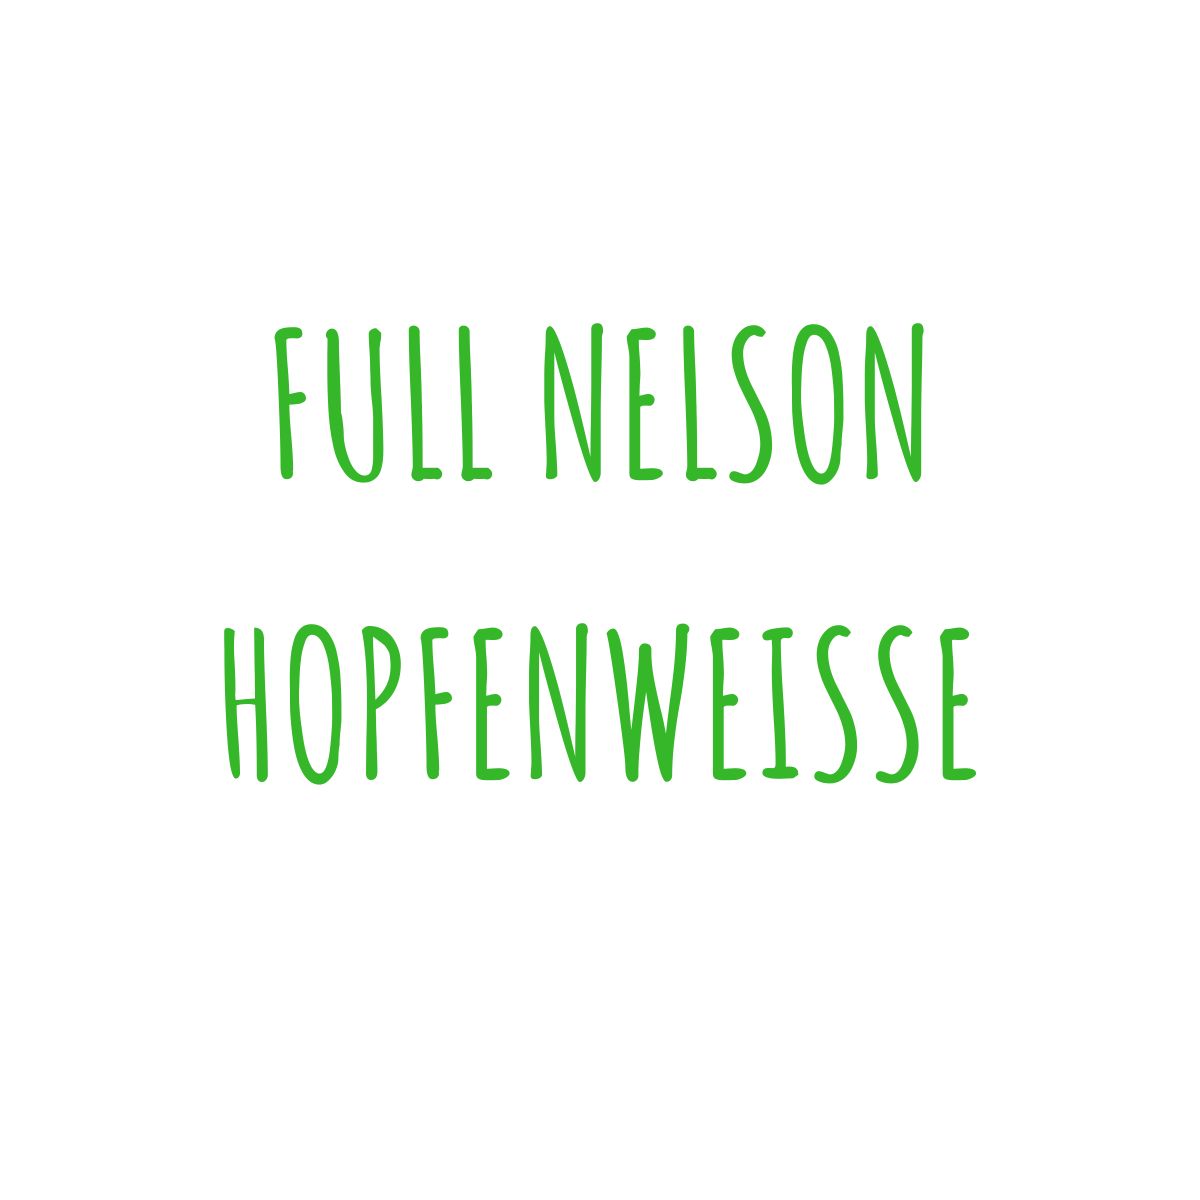 Full Nelson - Hopfenweisse by MashCamp